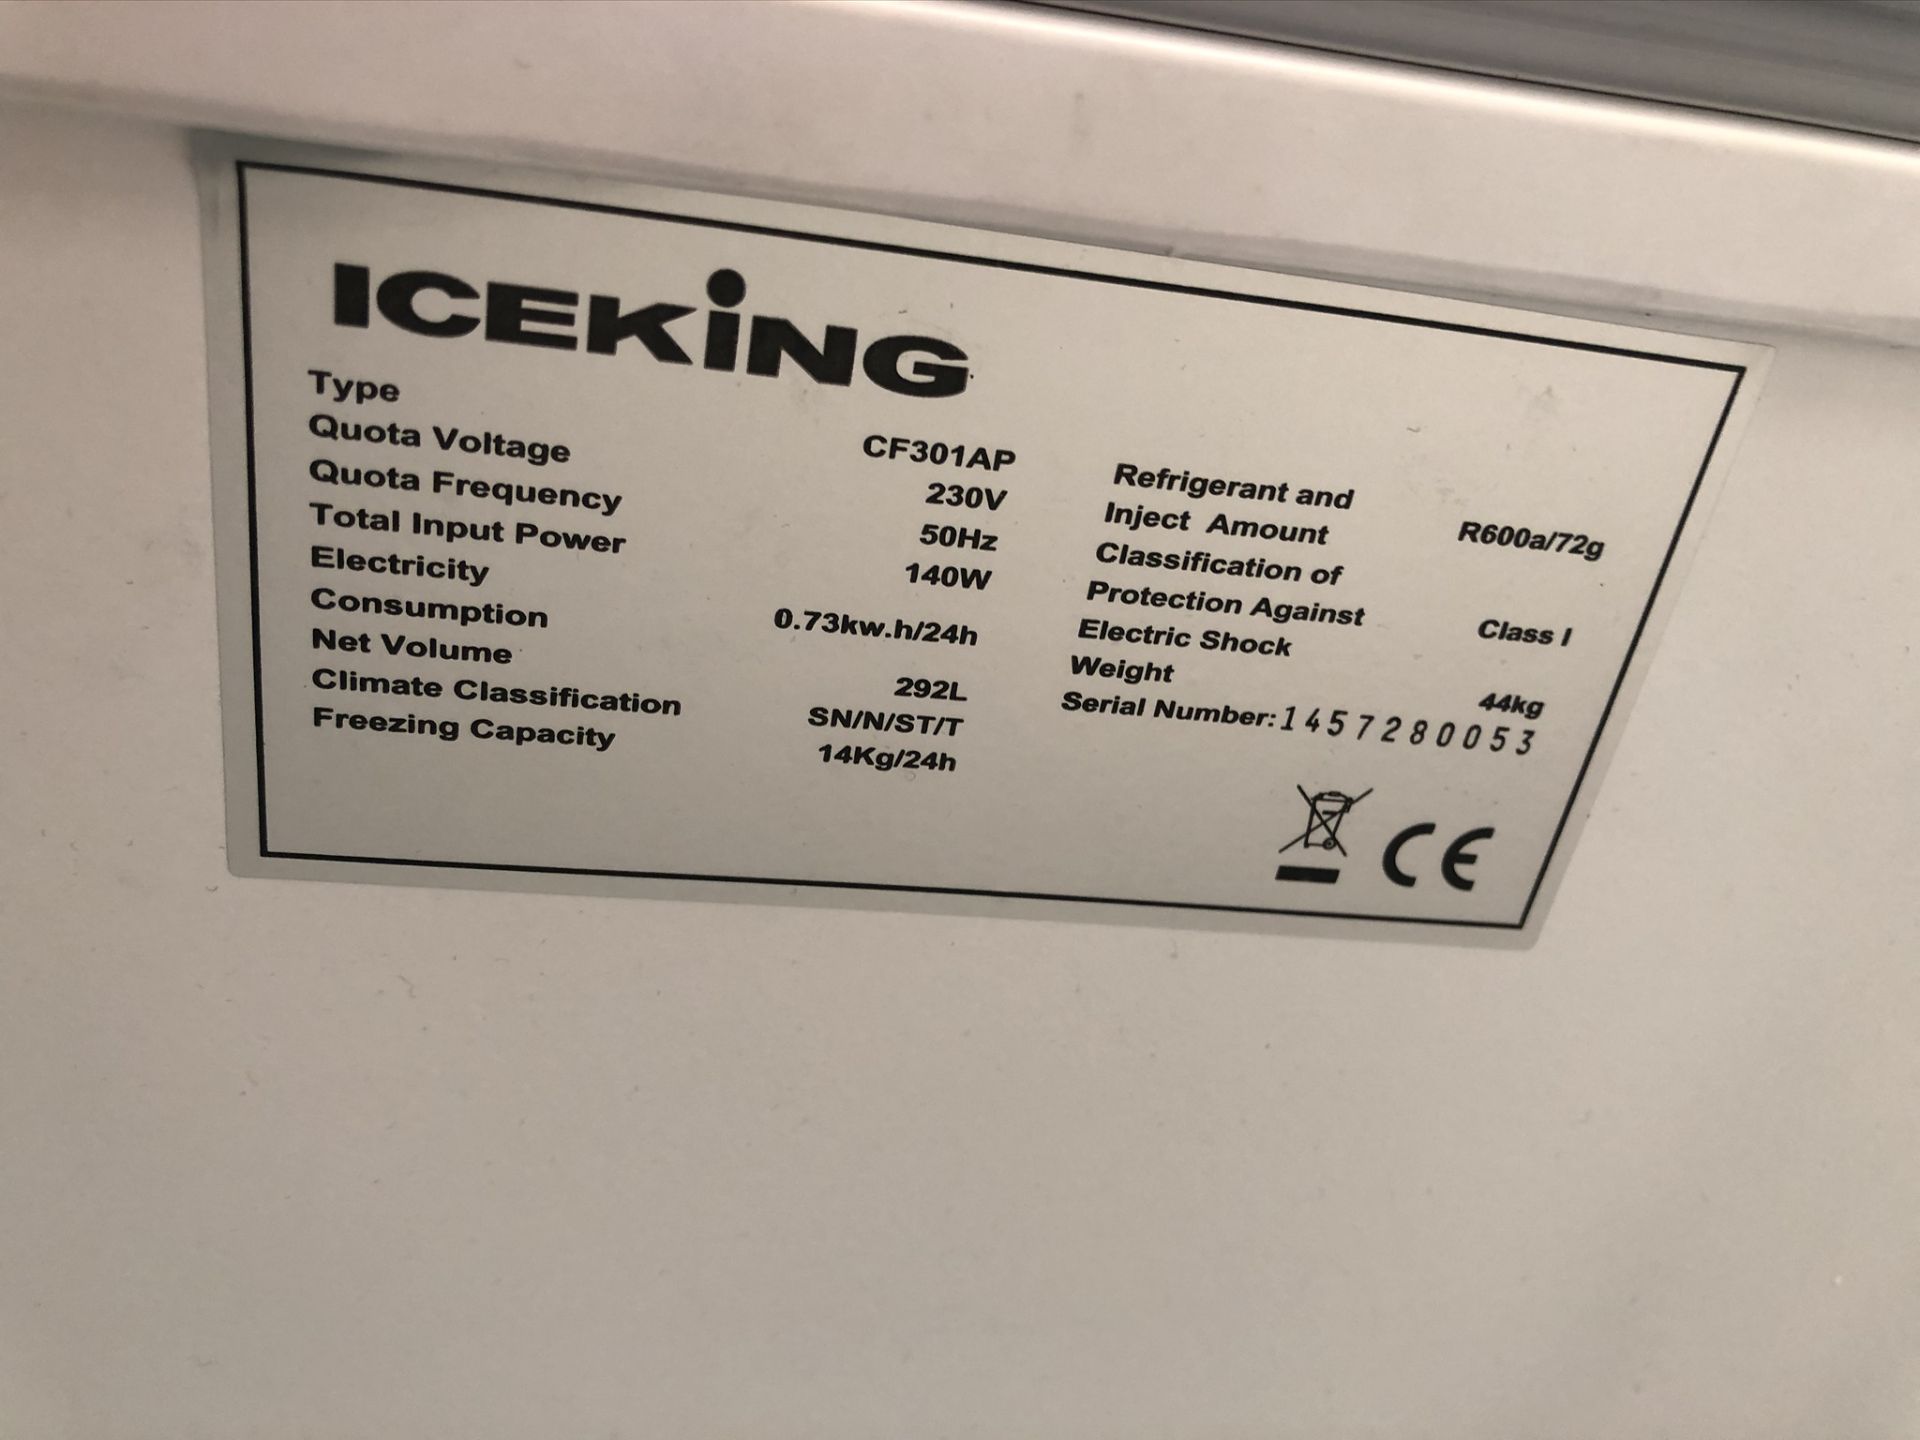 Beko Iceking CF301AP Chest Freezer - Image 4 of 4